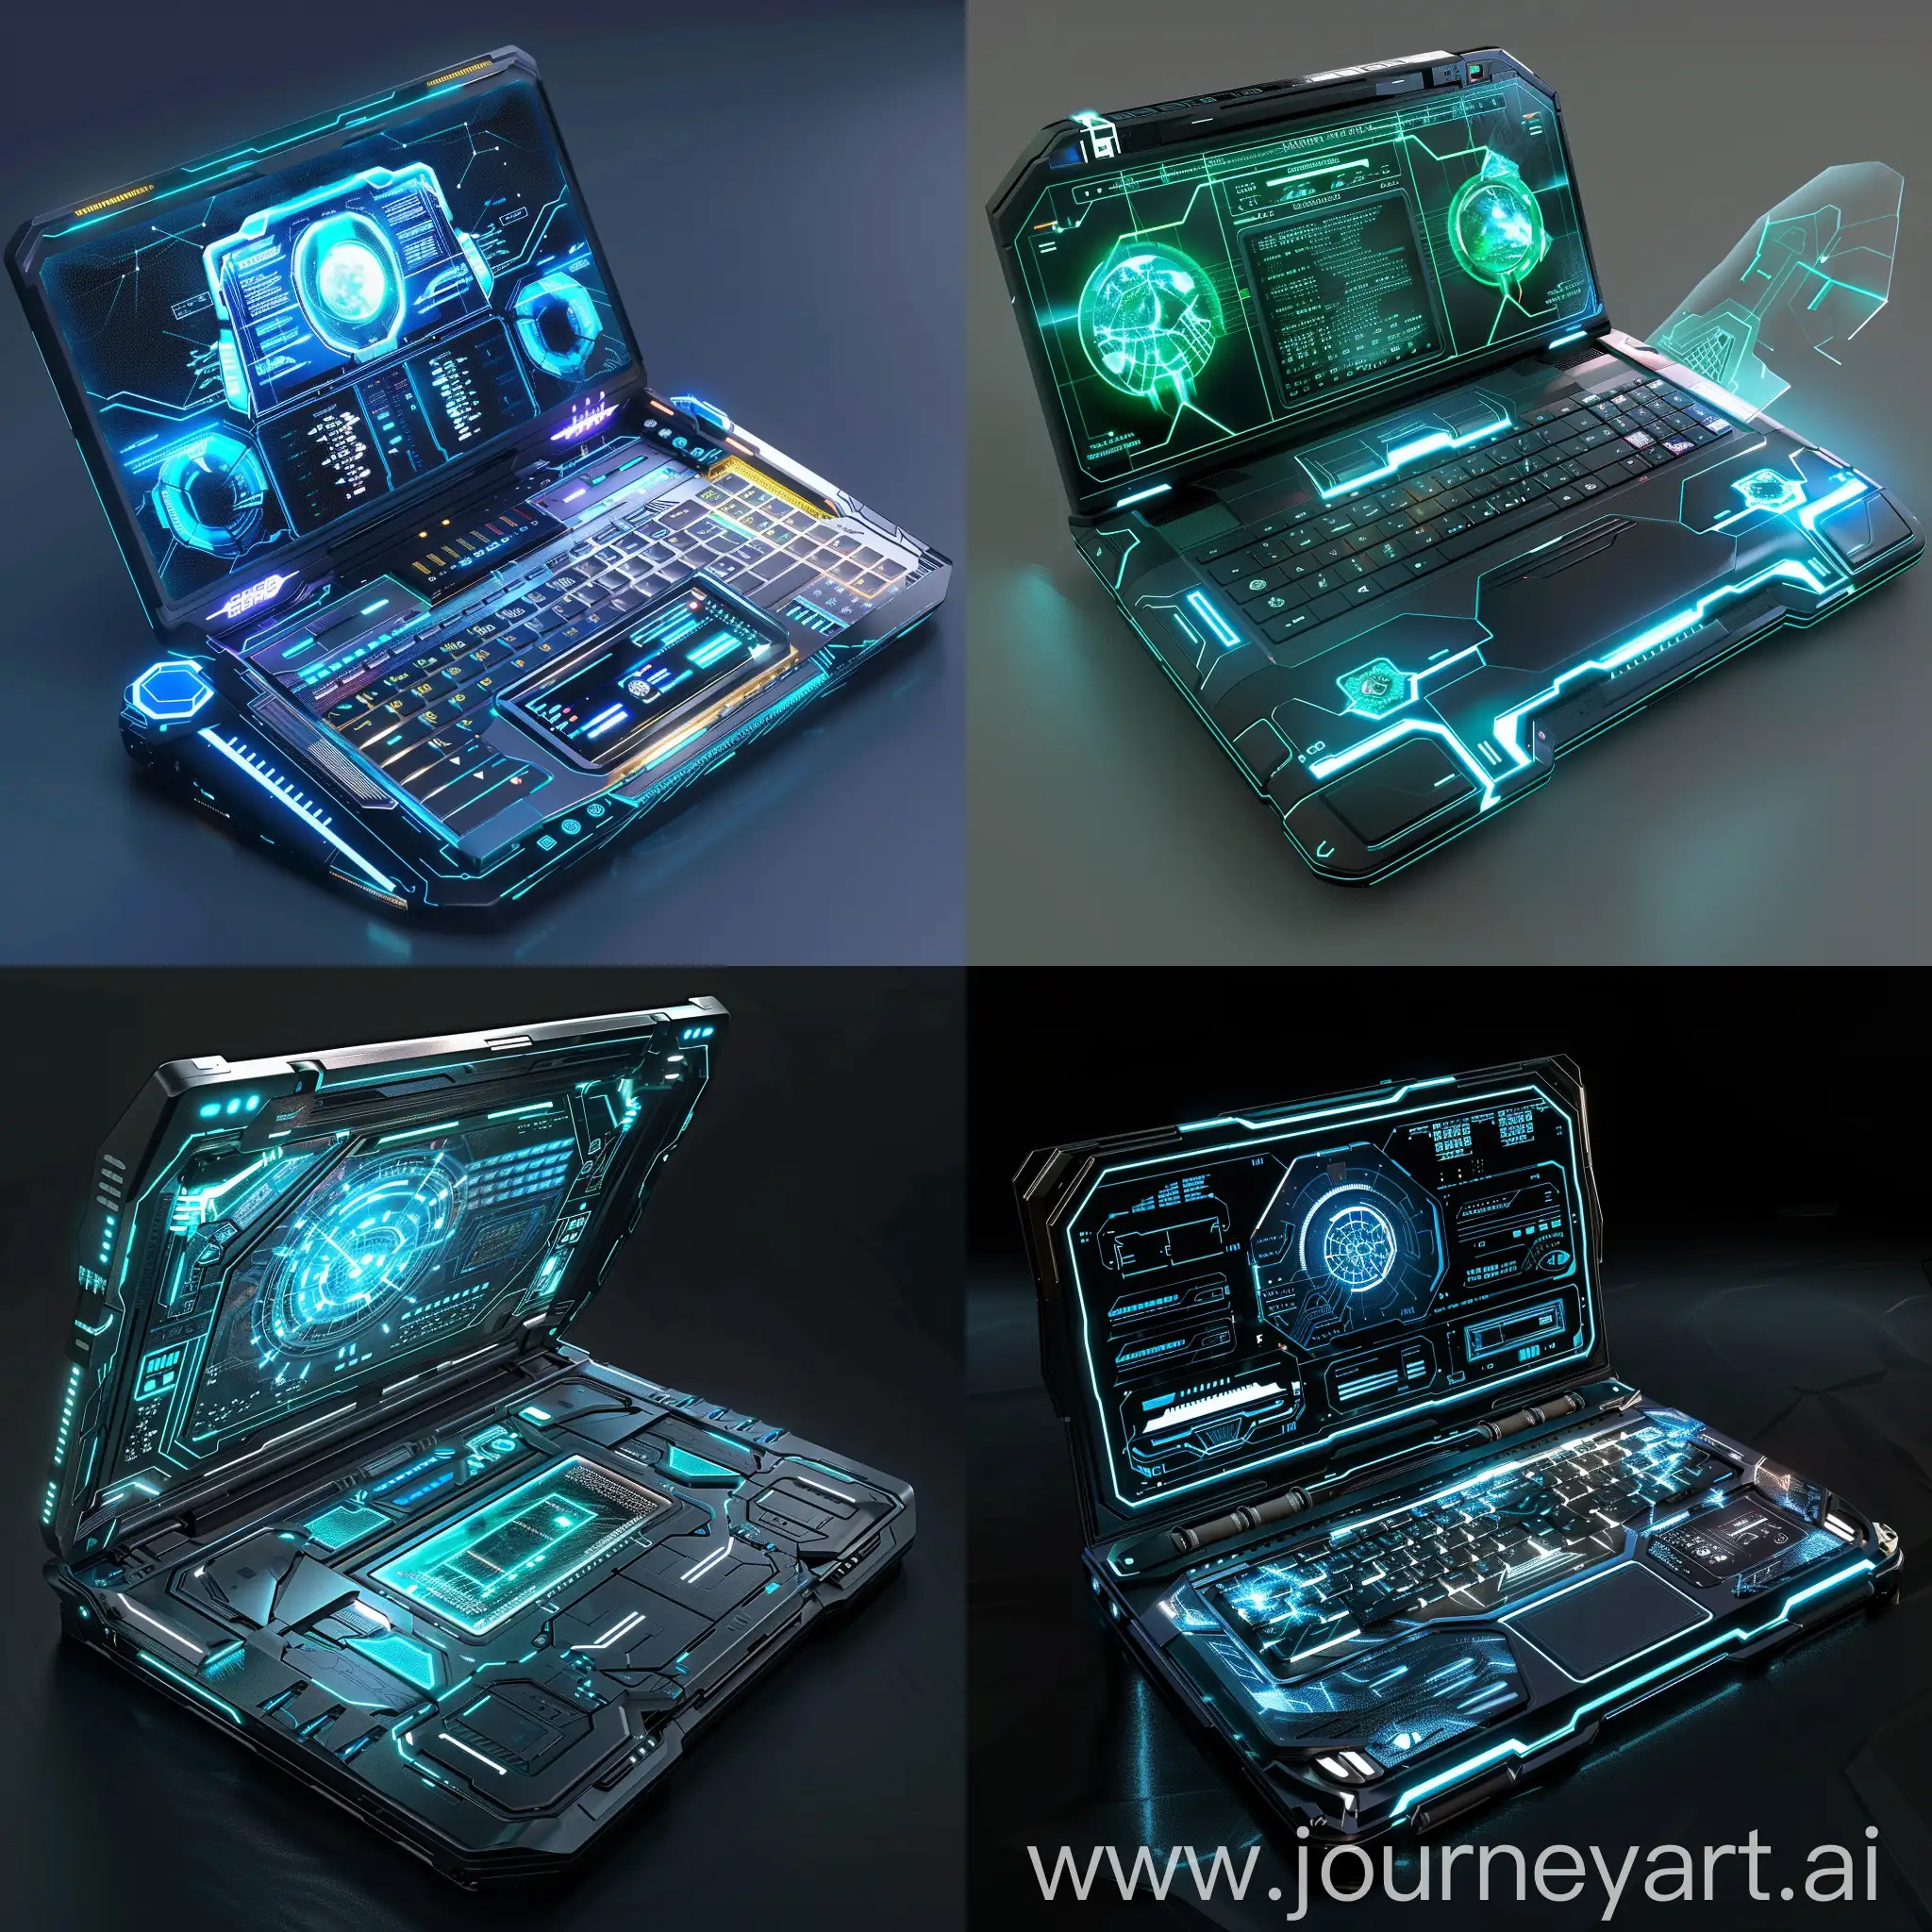 Futuristic-SciFi-Laptop-with-Quantum-Processor-and-Holographic-Display